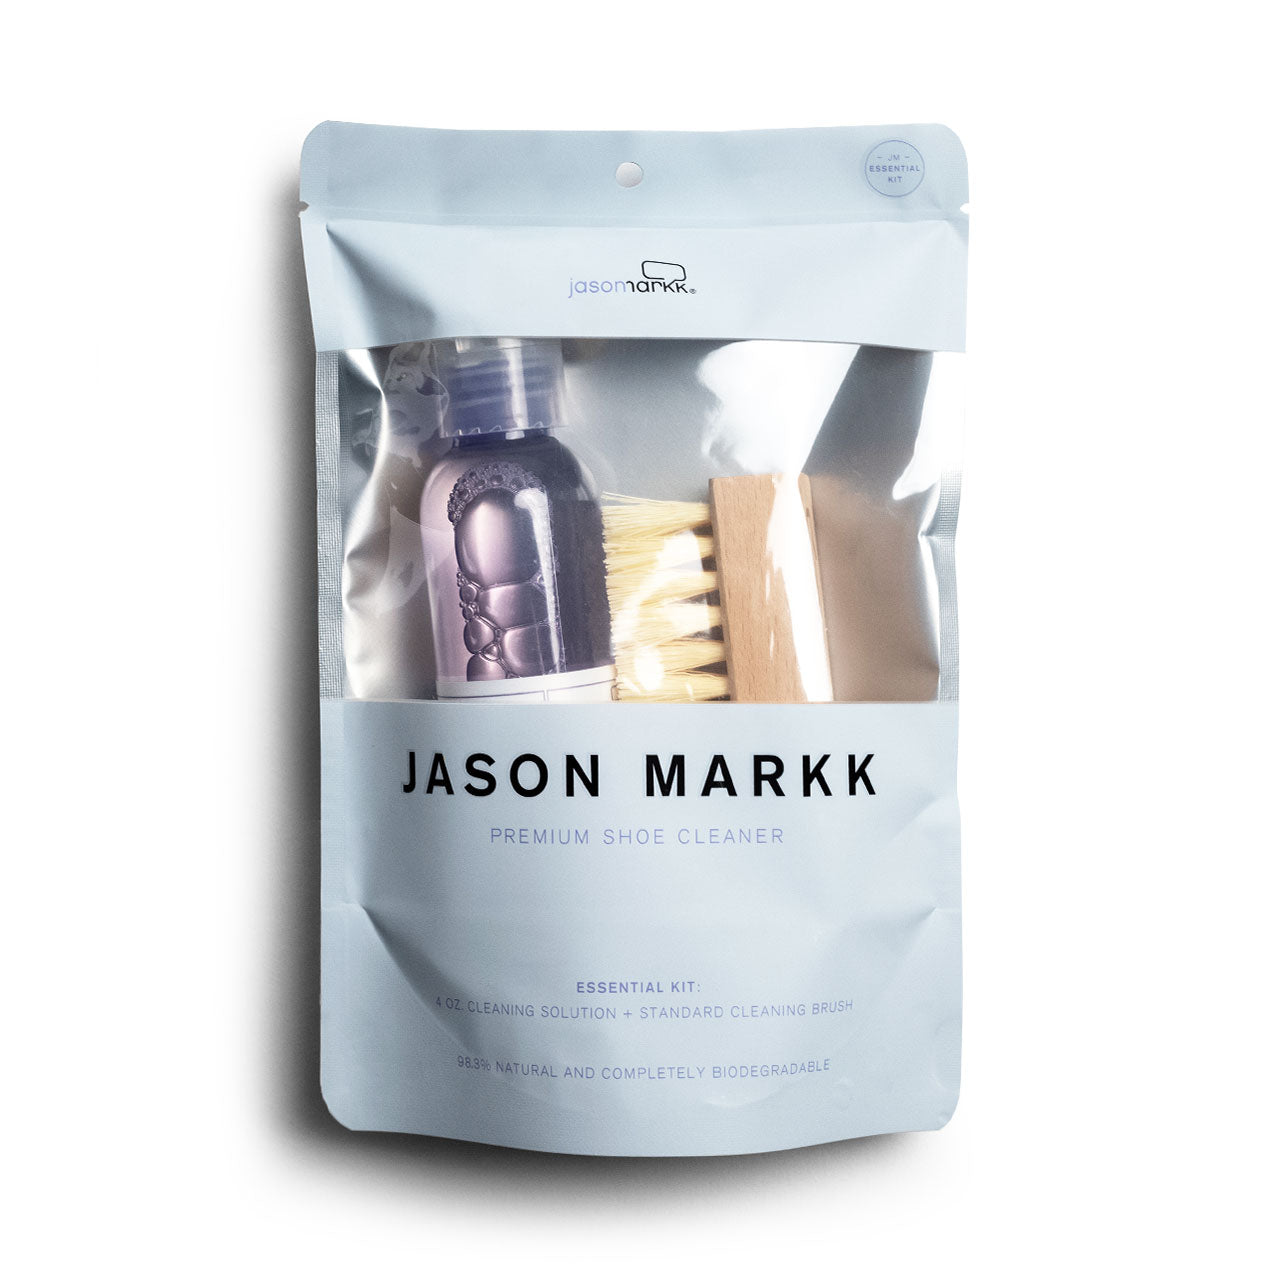 Jason Markk Essentials Kit